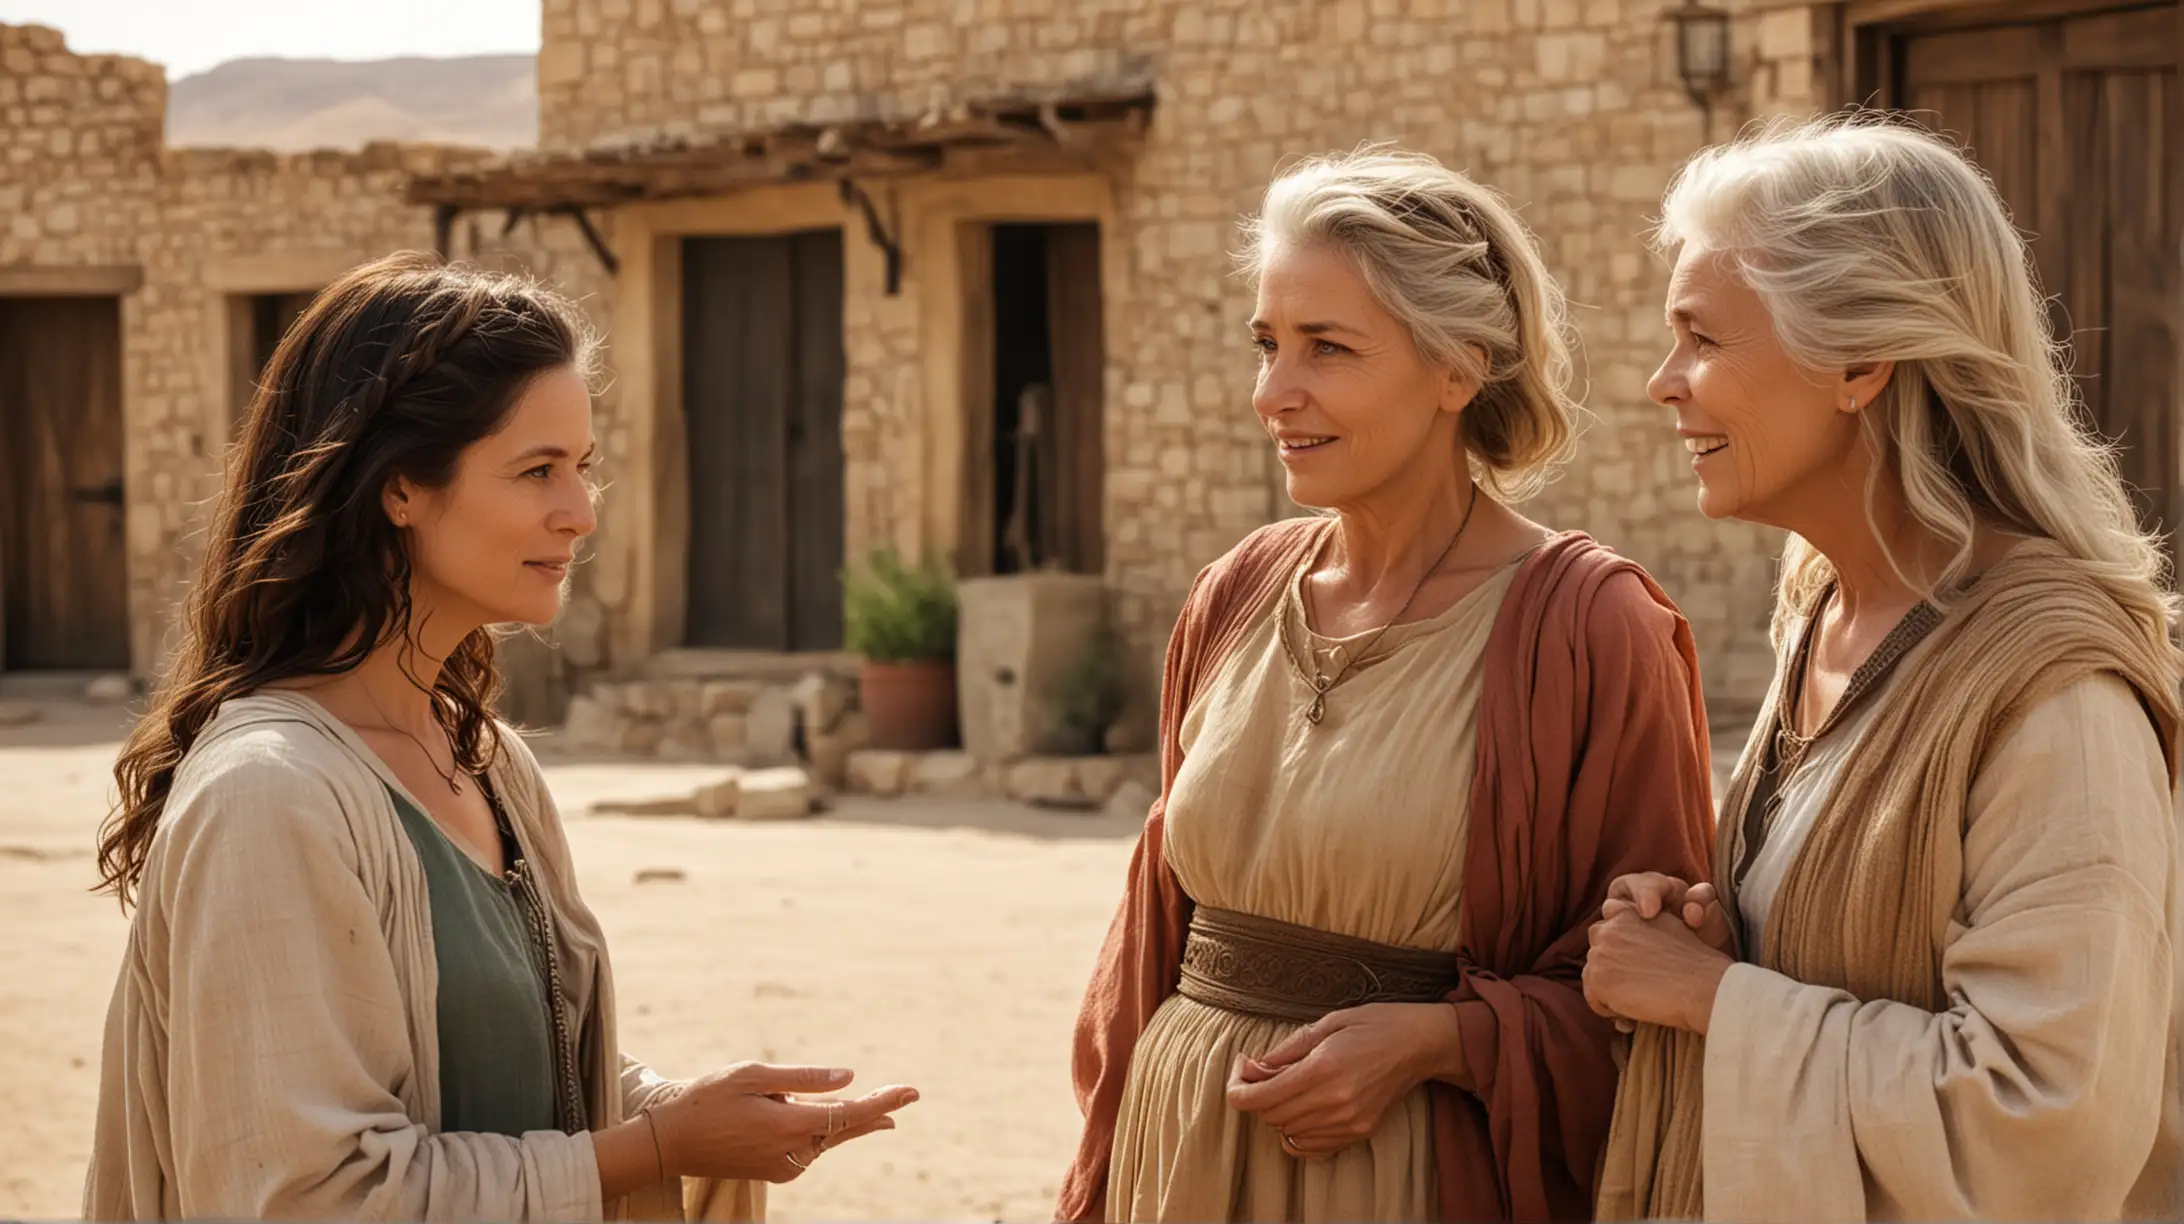 Conversations Among Women in Ancient Desert Town Biblical Era Scene